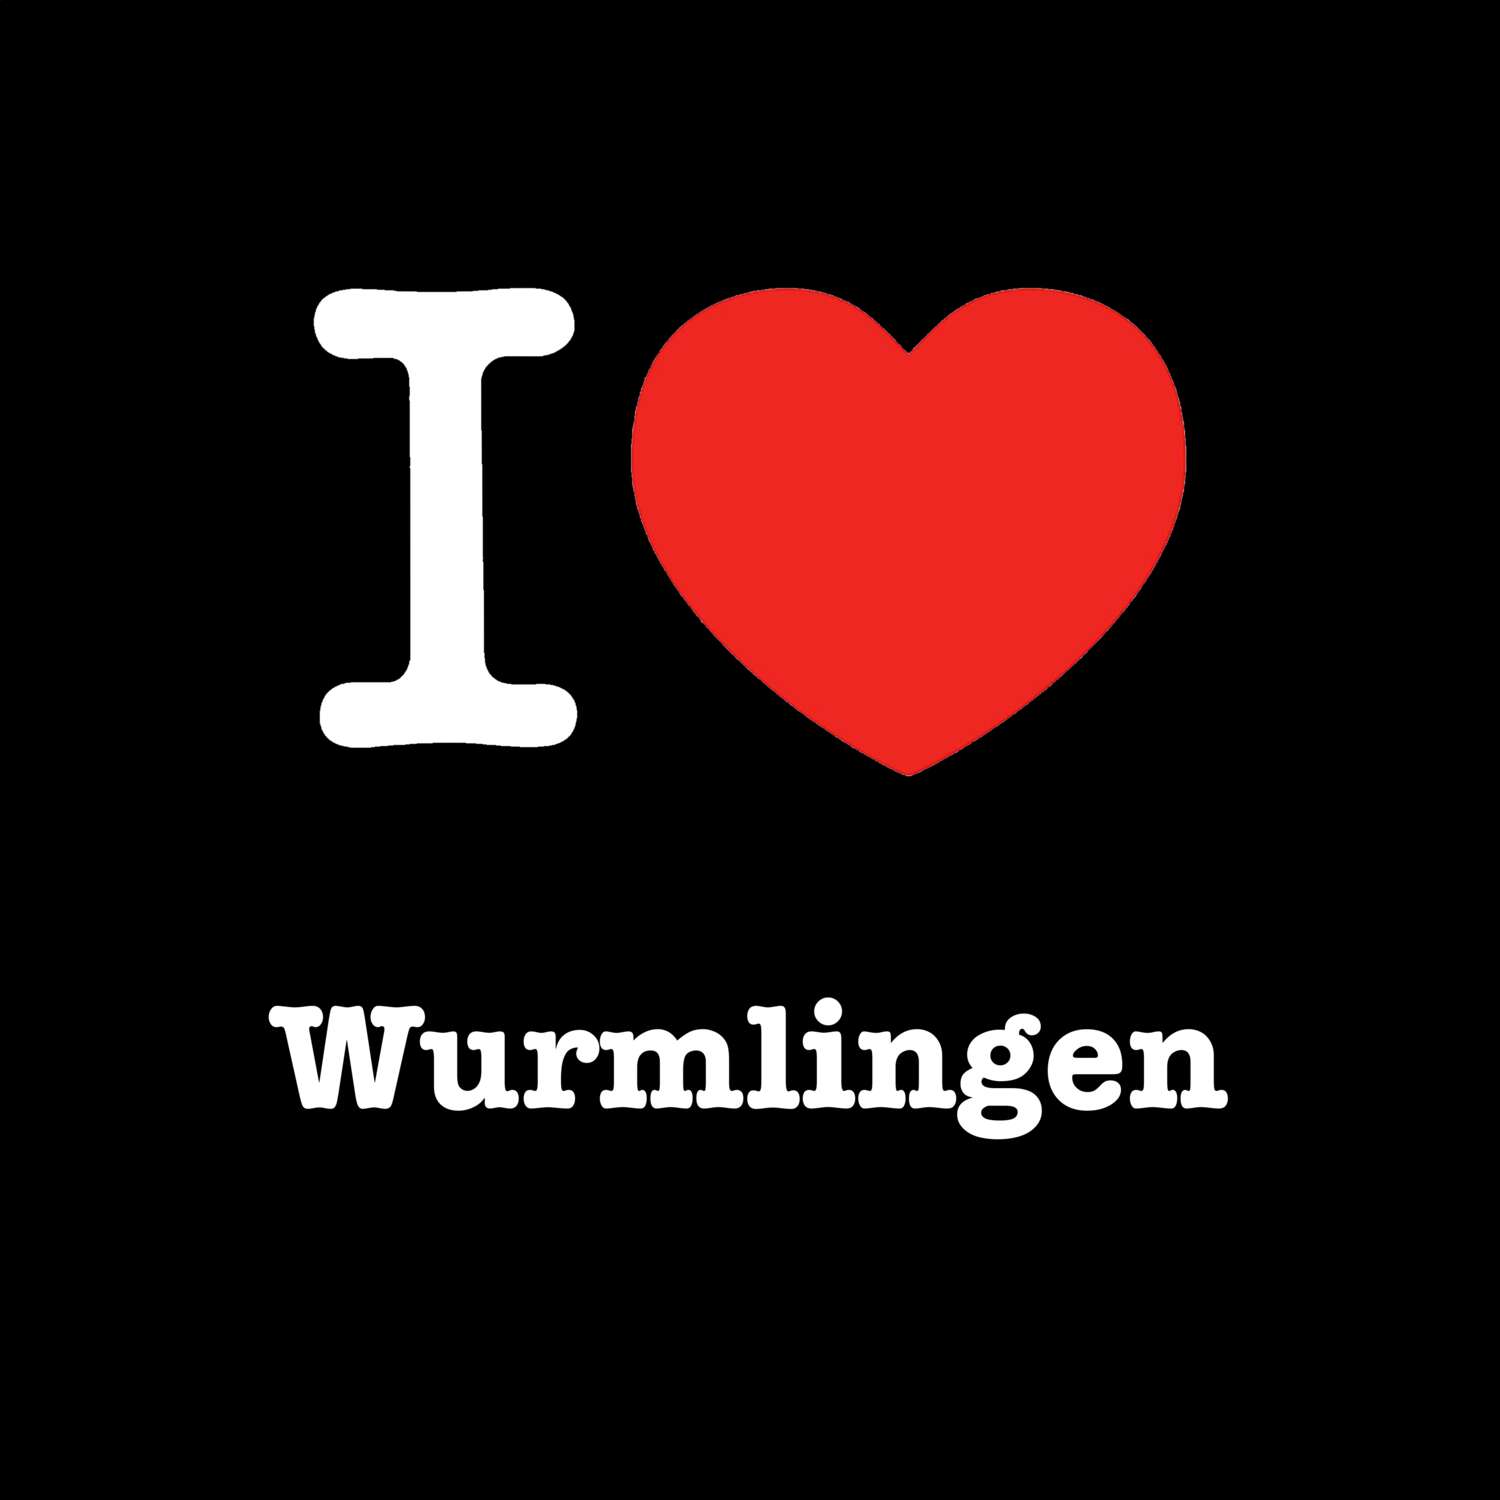 Wurmlingen T-Shirt »I love«